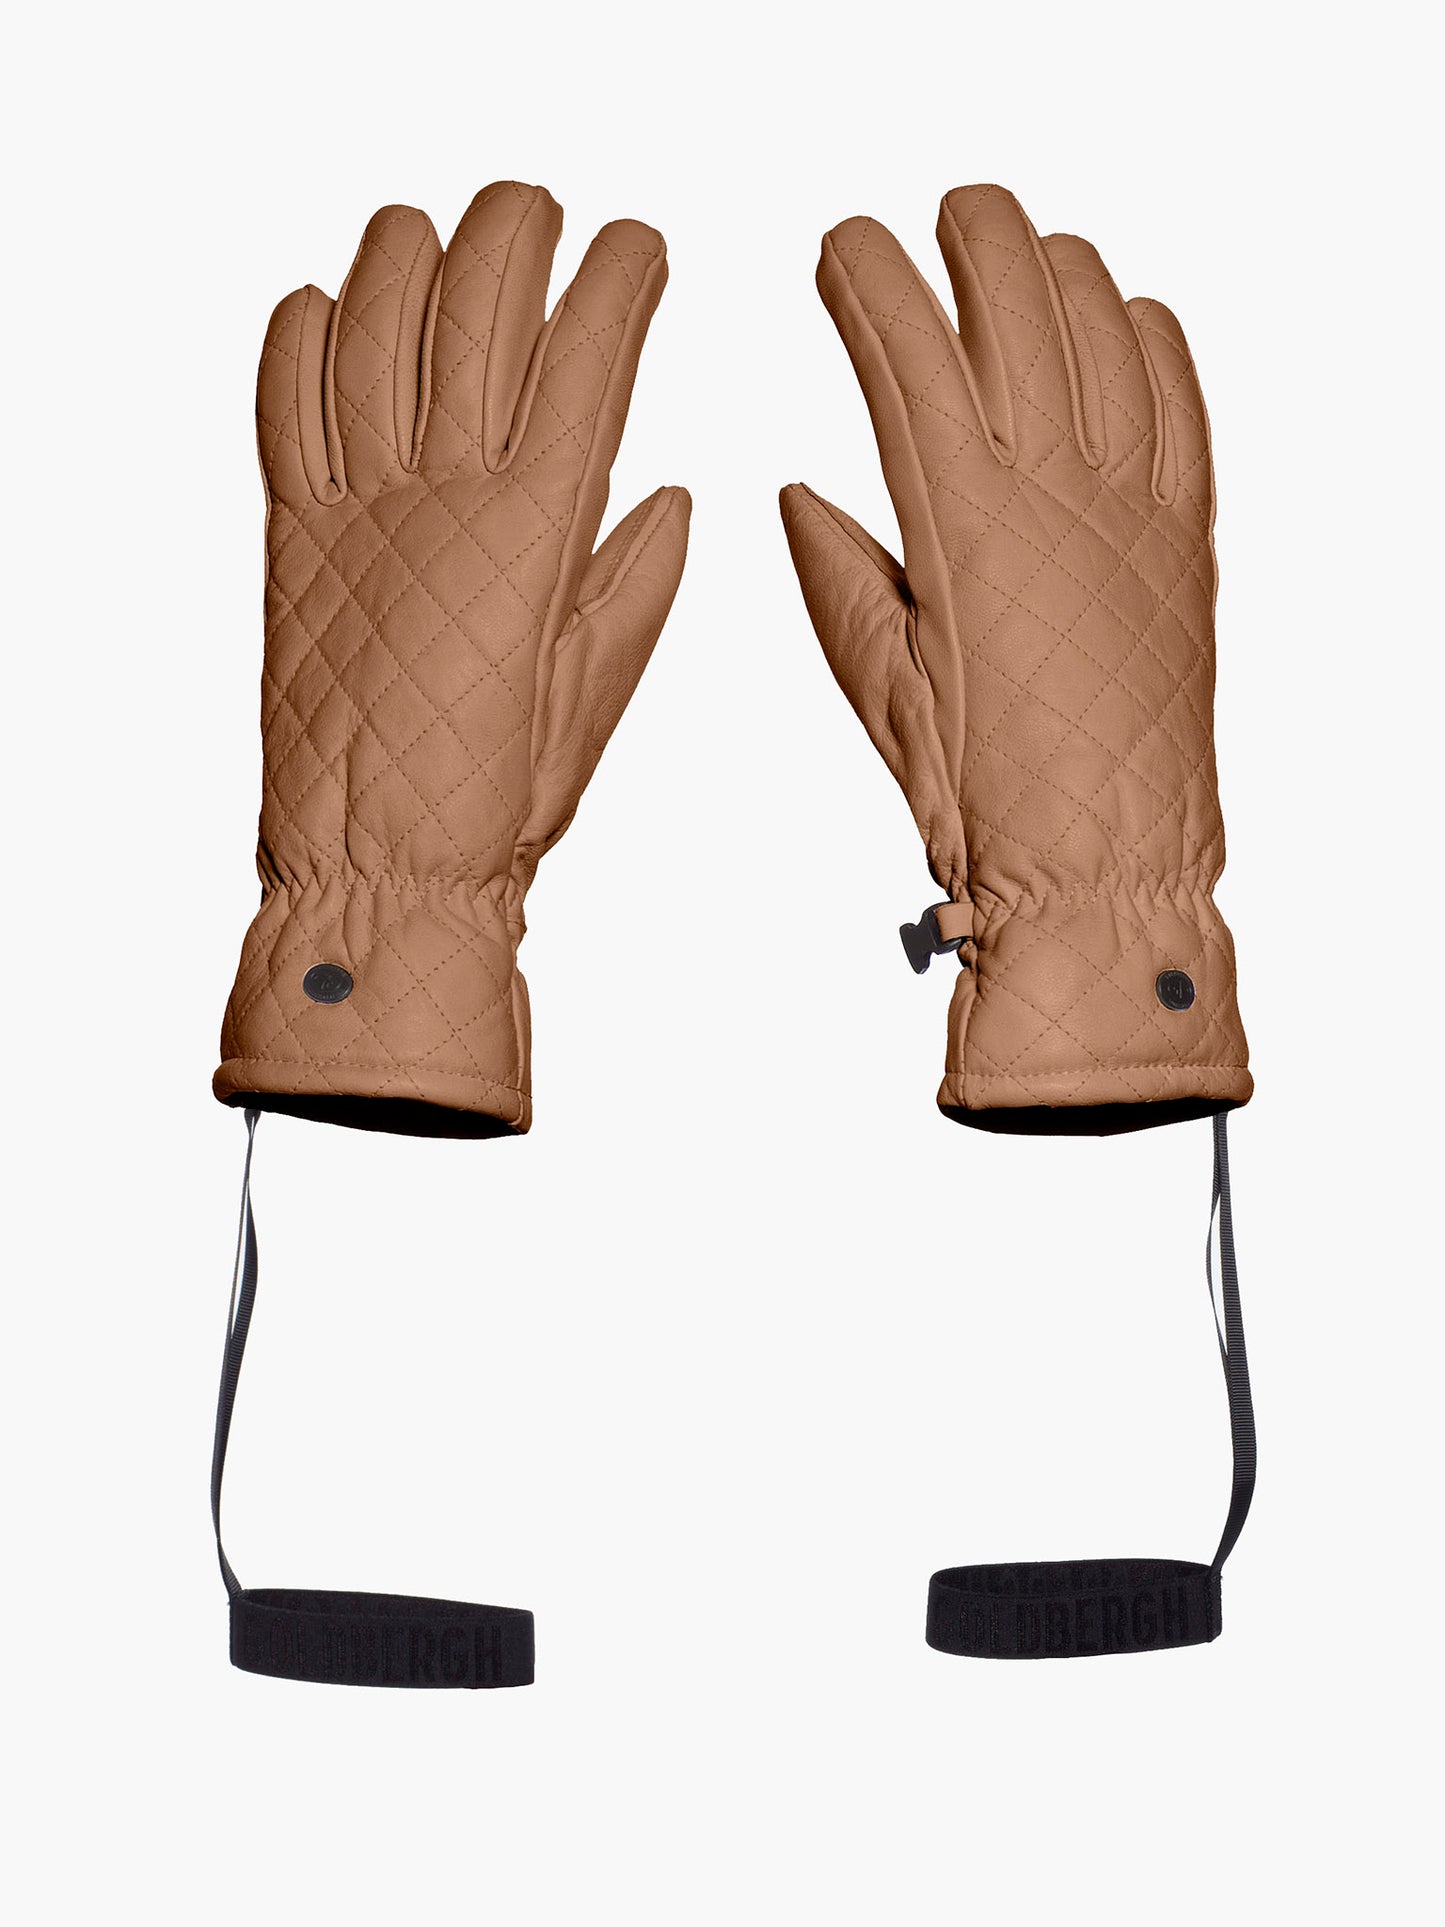 NISHI gloves